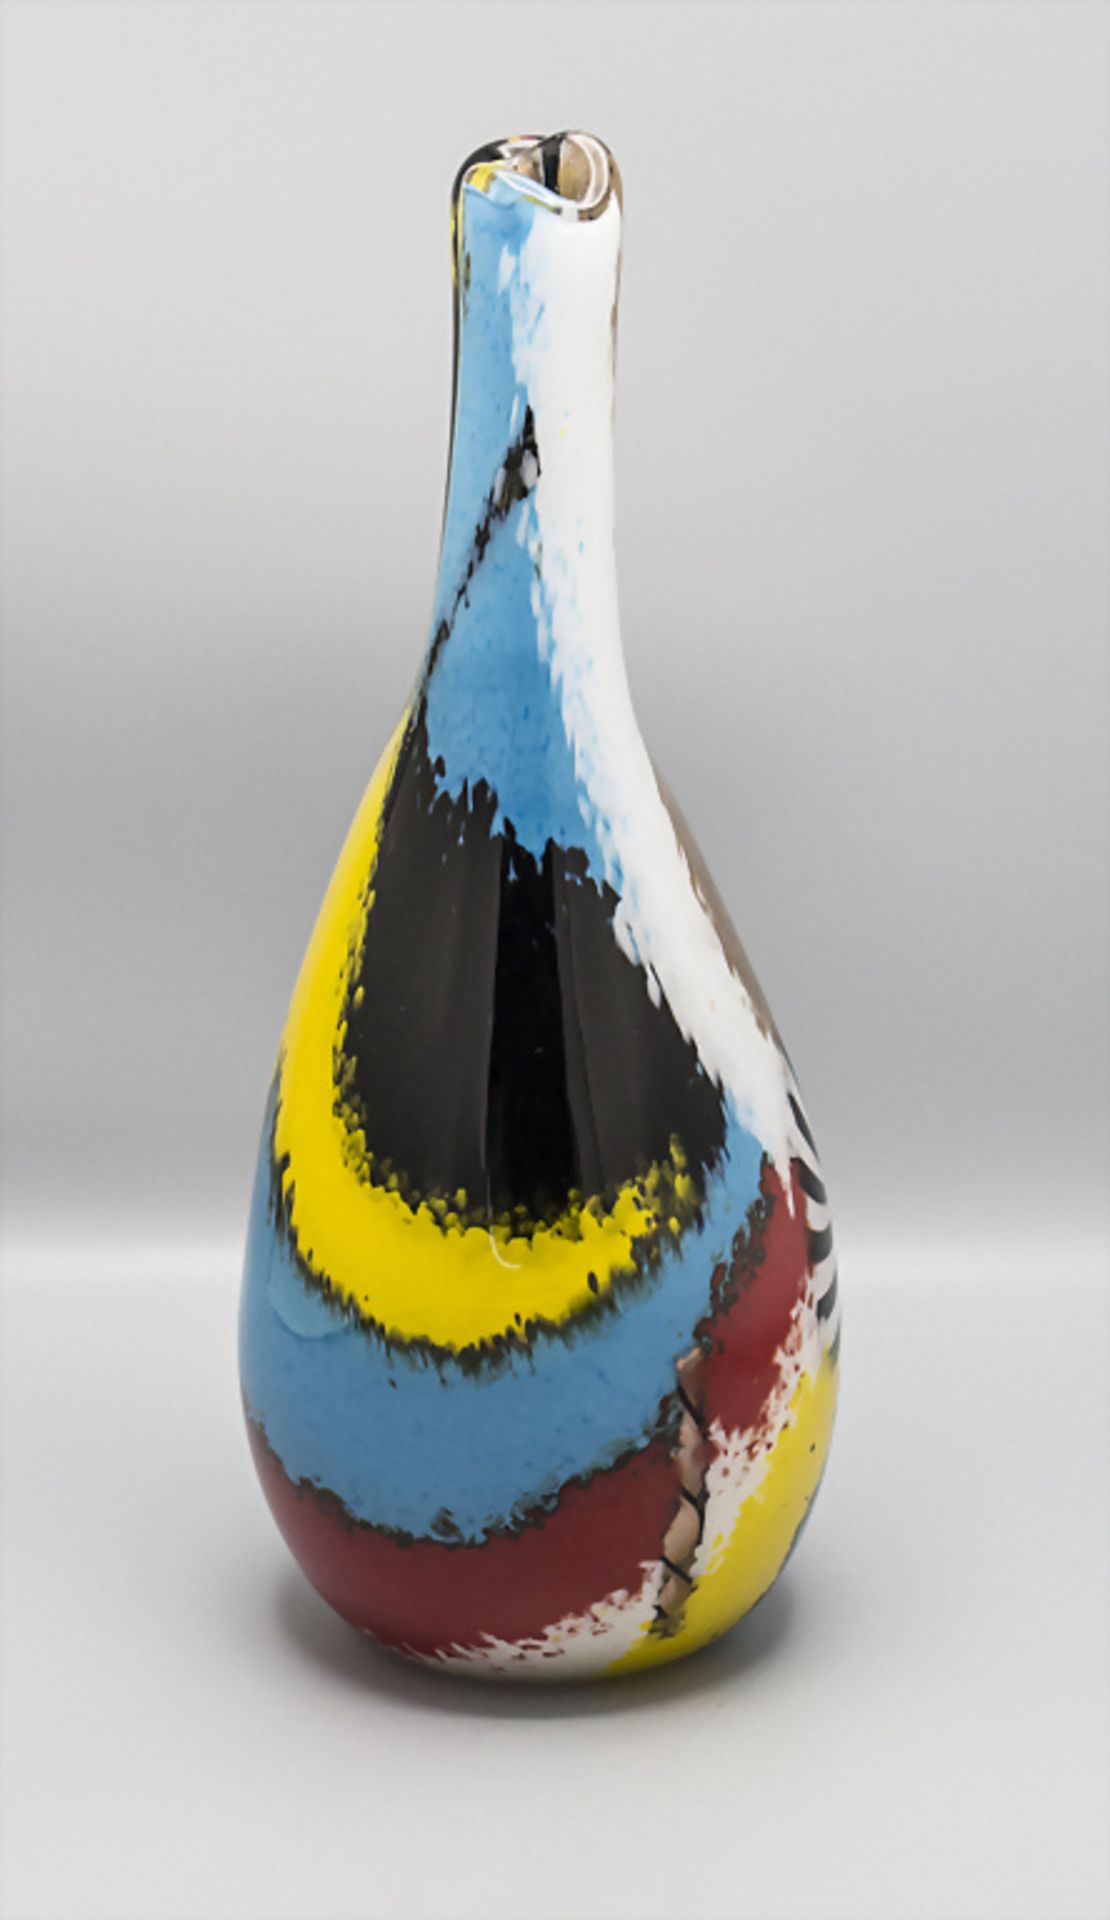 Doppelhalsvase / A double neck vase, Serie 'Oriente Salomone', Dino Martens, Murano, 1950 - Image 3 of 5